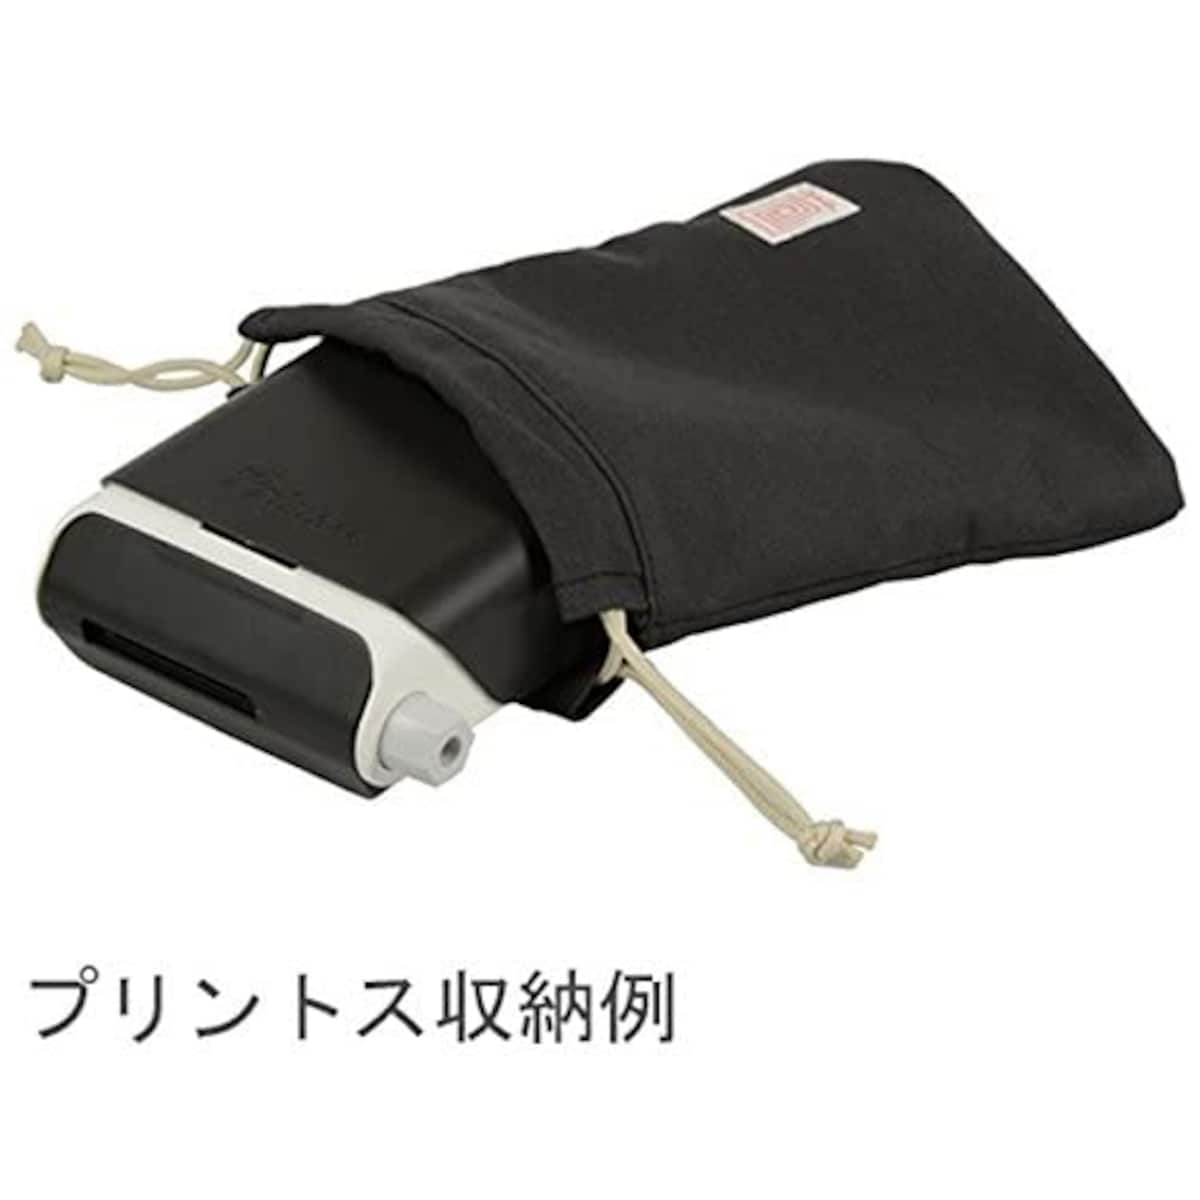  Kenko 汎用ポーチ 包 巾着ポーチ Mサイズ SUMI 811504画像2 